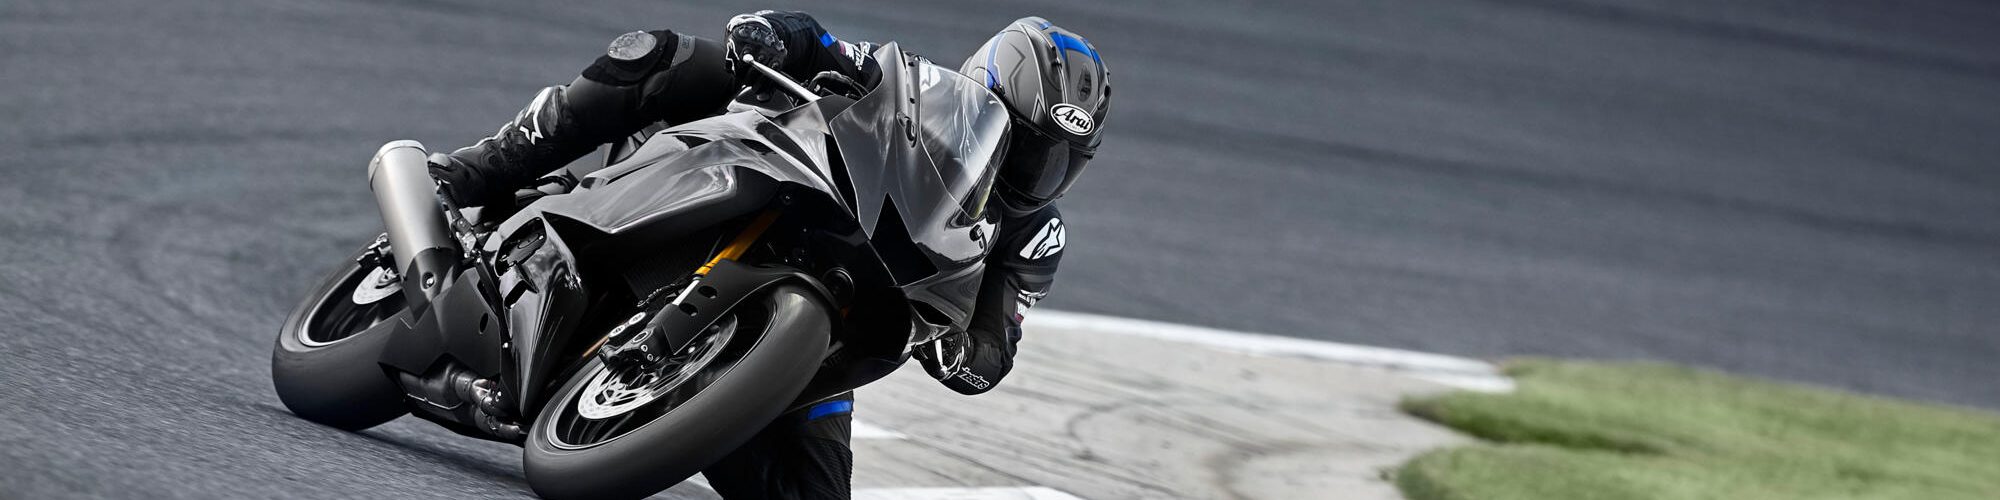 Yamaha R6 Race | MotorCentrumWest